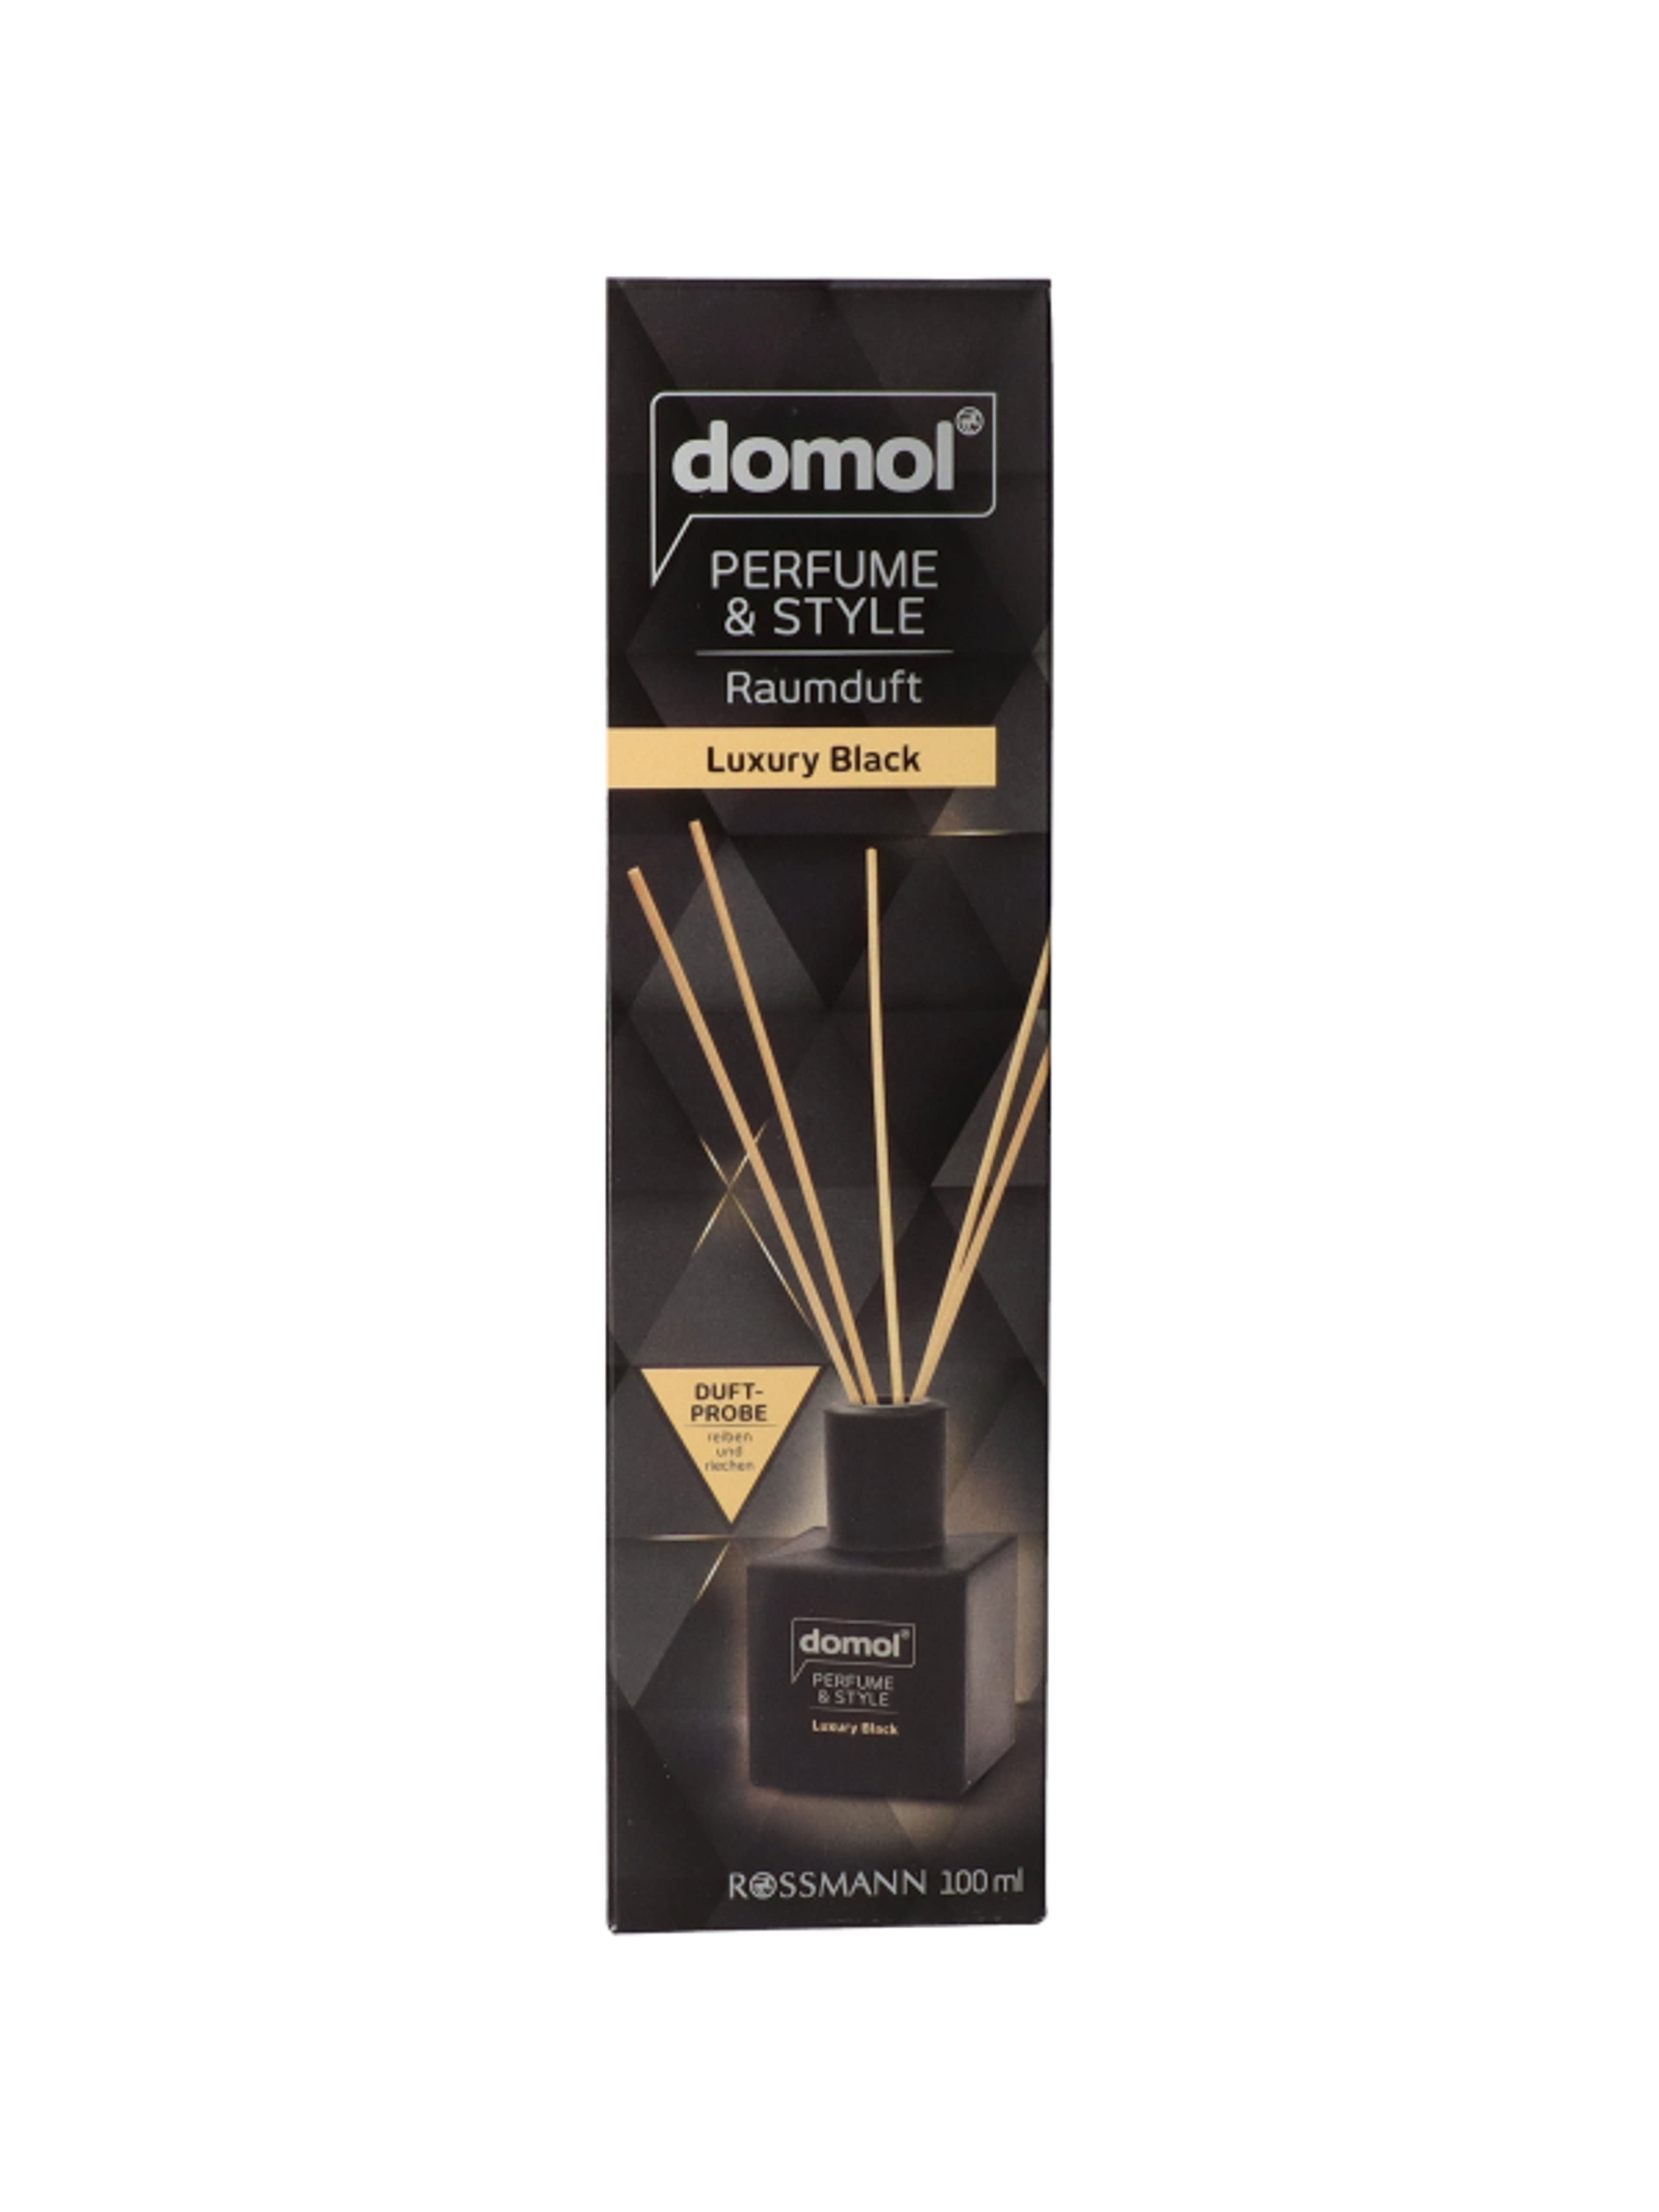 Domol perfume & style luxury black - 100 ml